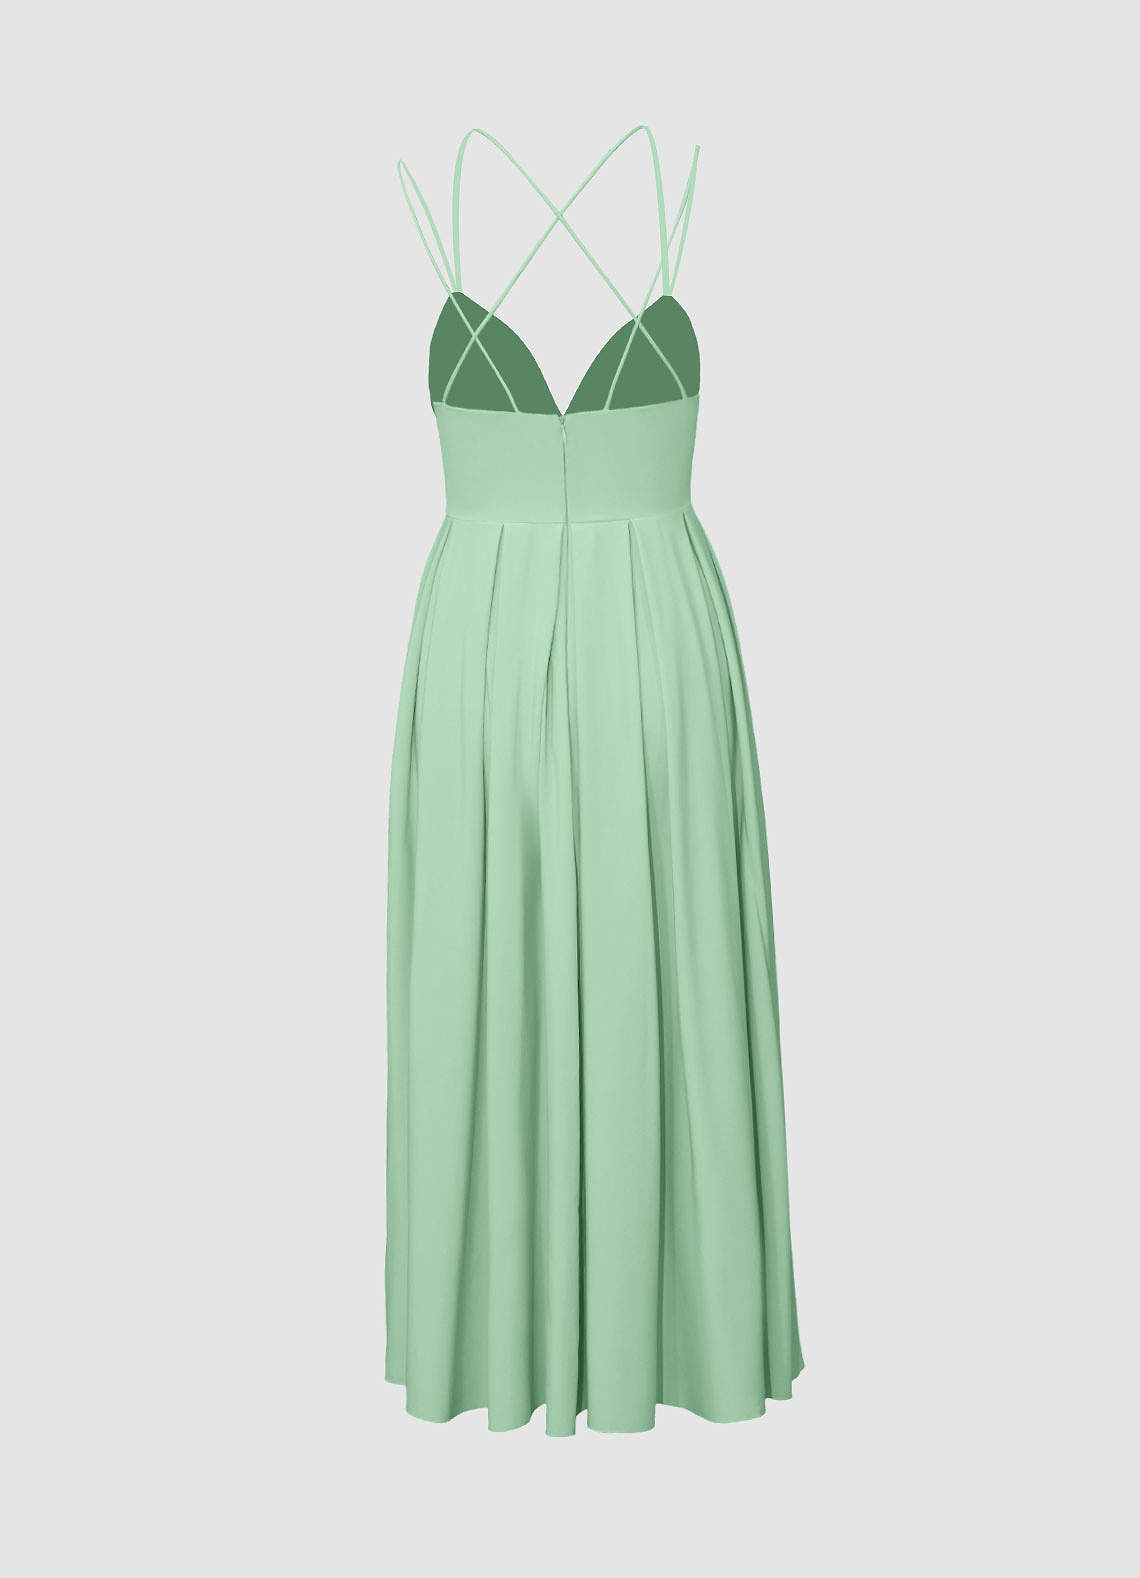 Extravagant Taste Mint Green Midi Dress image1